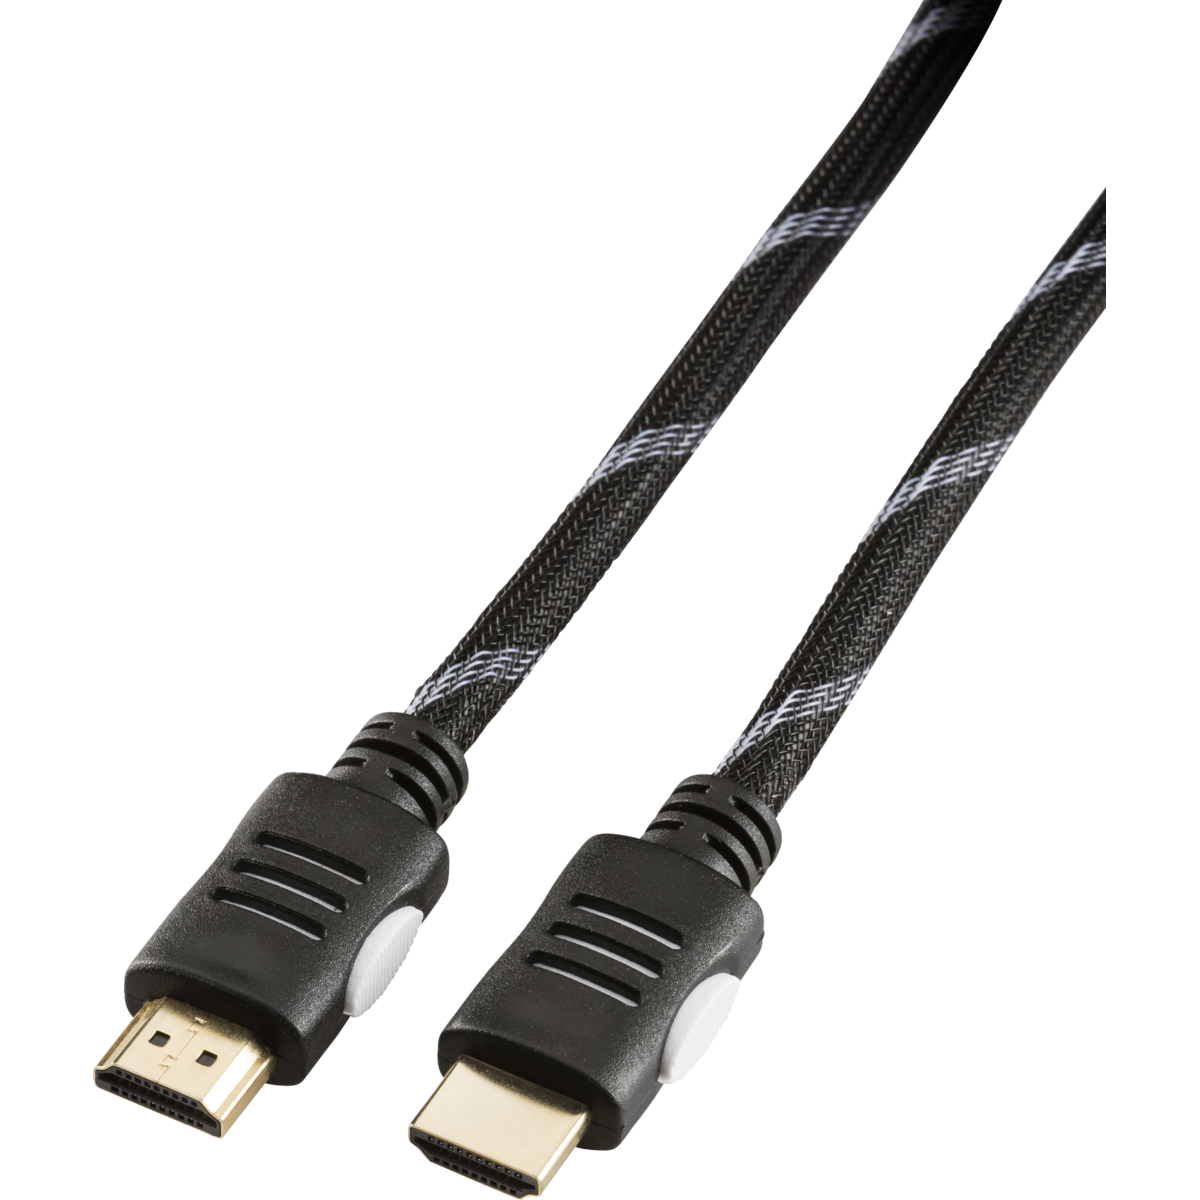 Knightsbridge AVHD4K3 4K High Speed HDMI Cable 3m